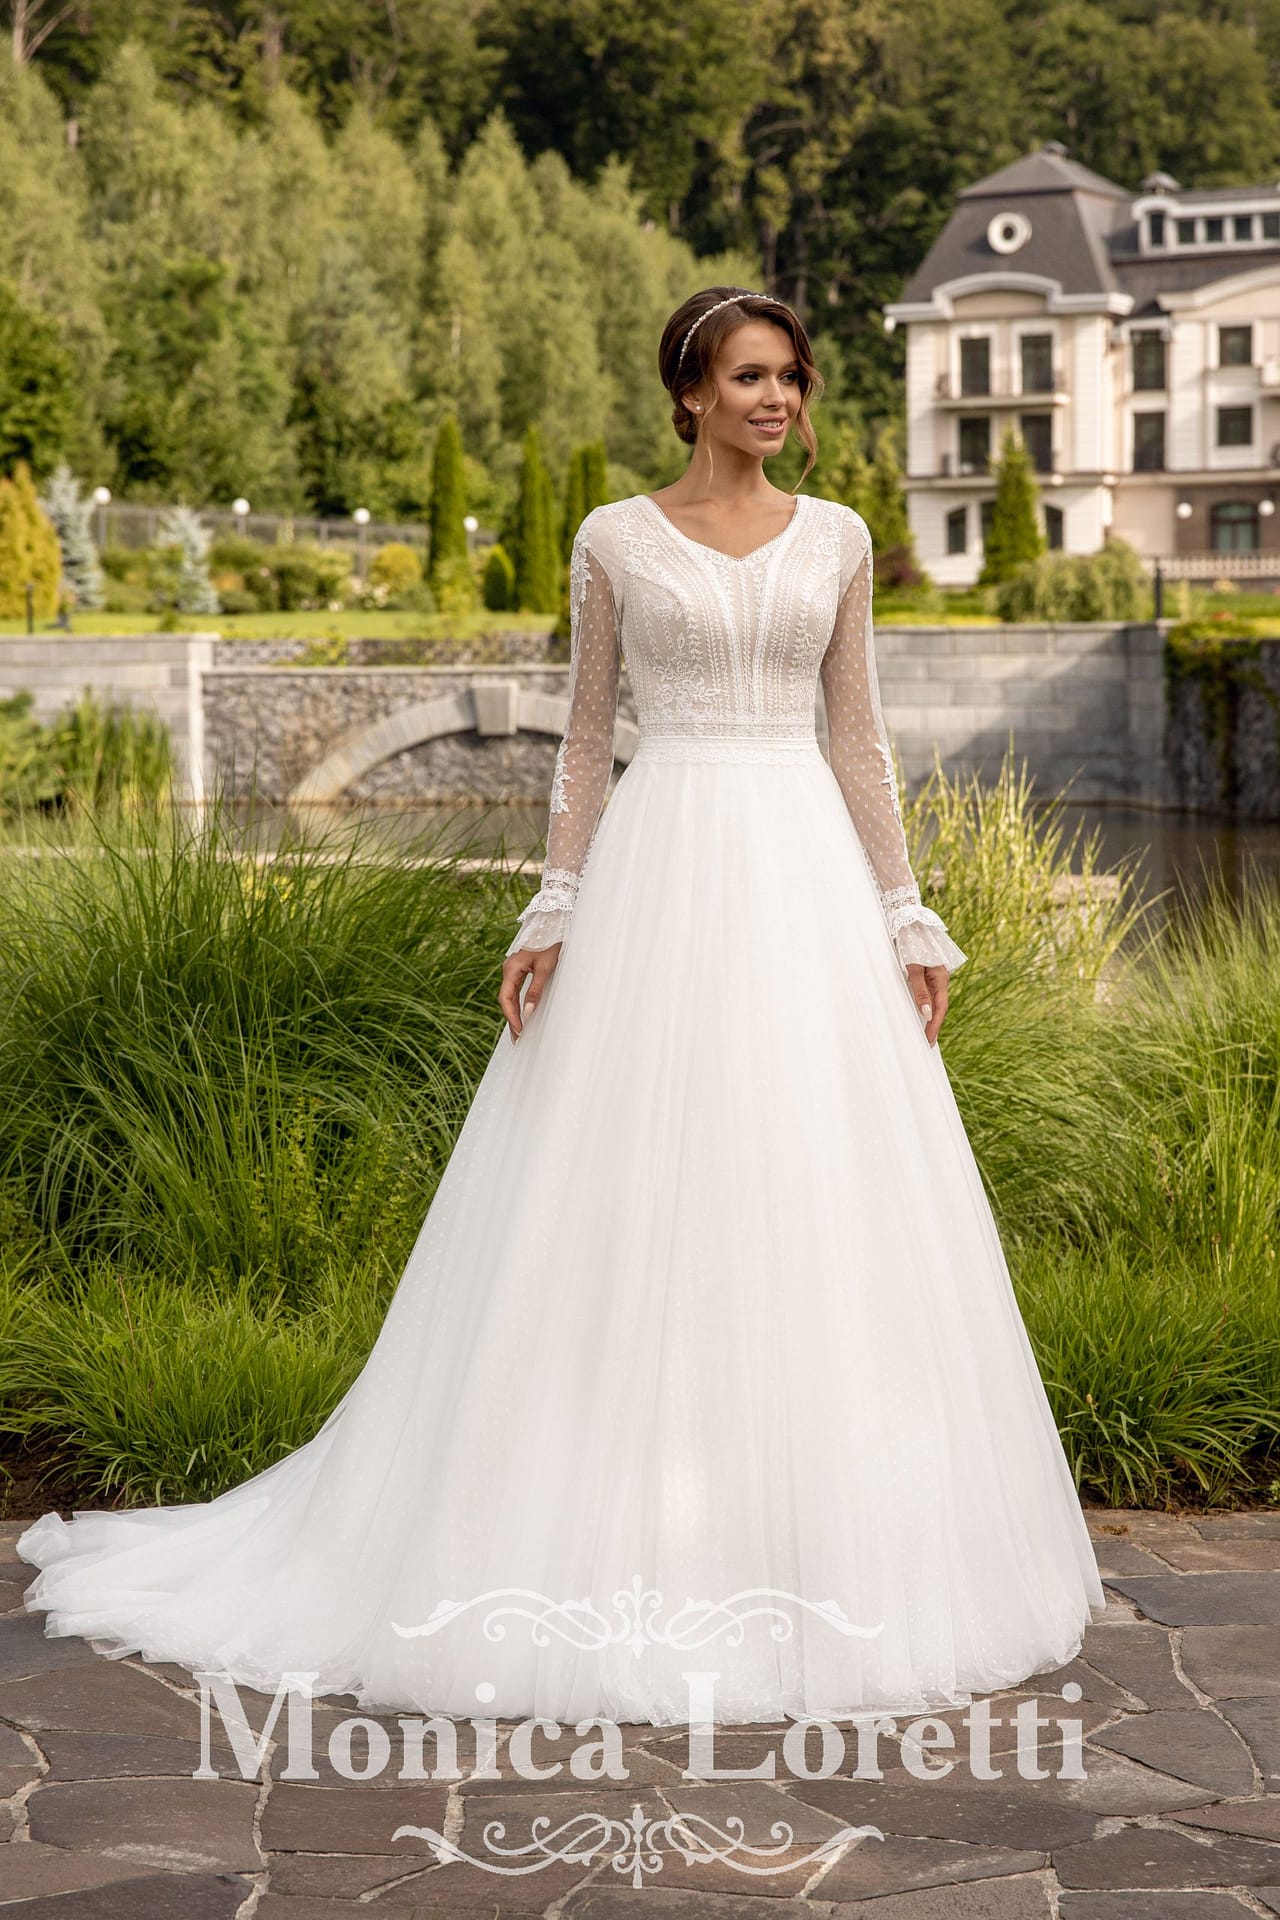 29 Best Long Sleeve Wedding Dresses - hitched.co.uk - hitched.co.uk